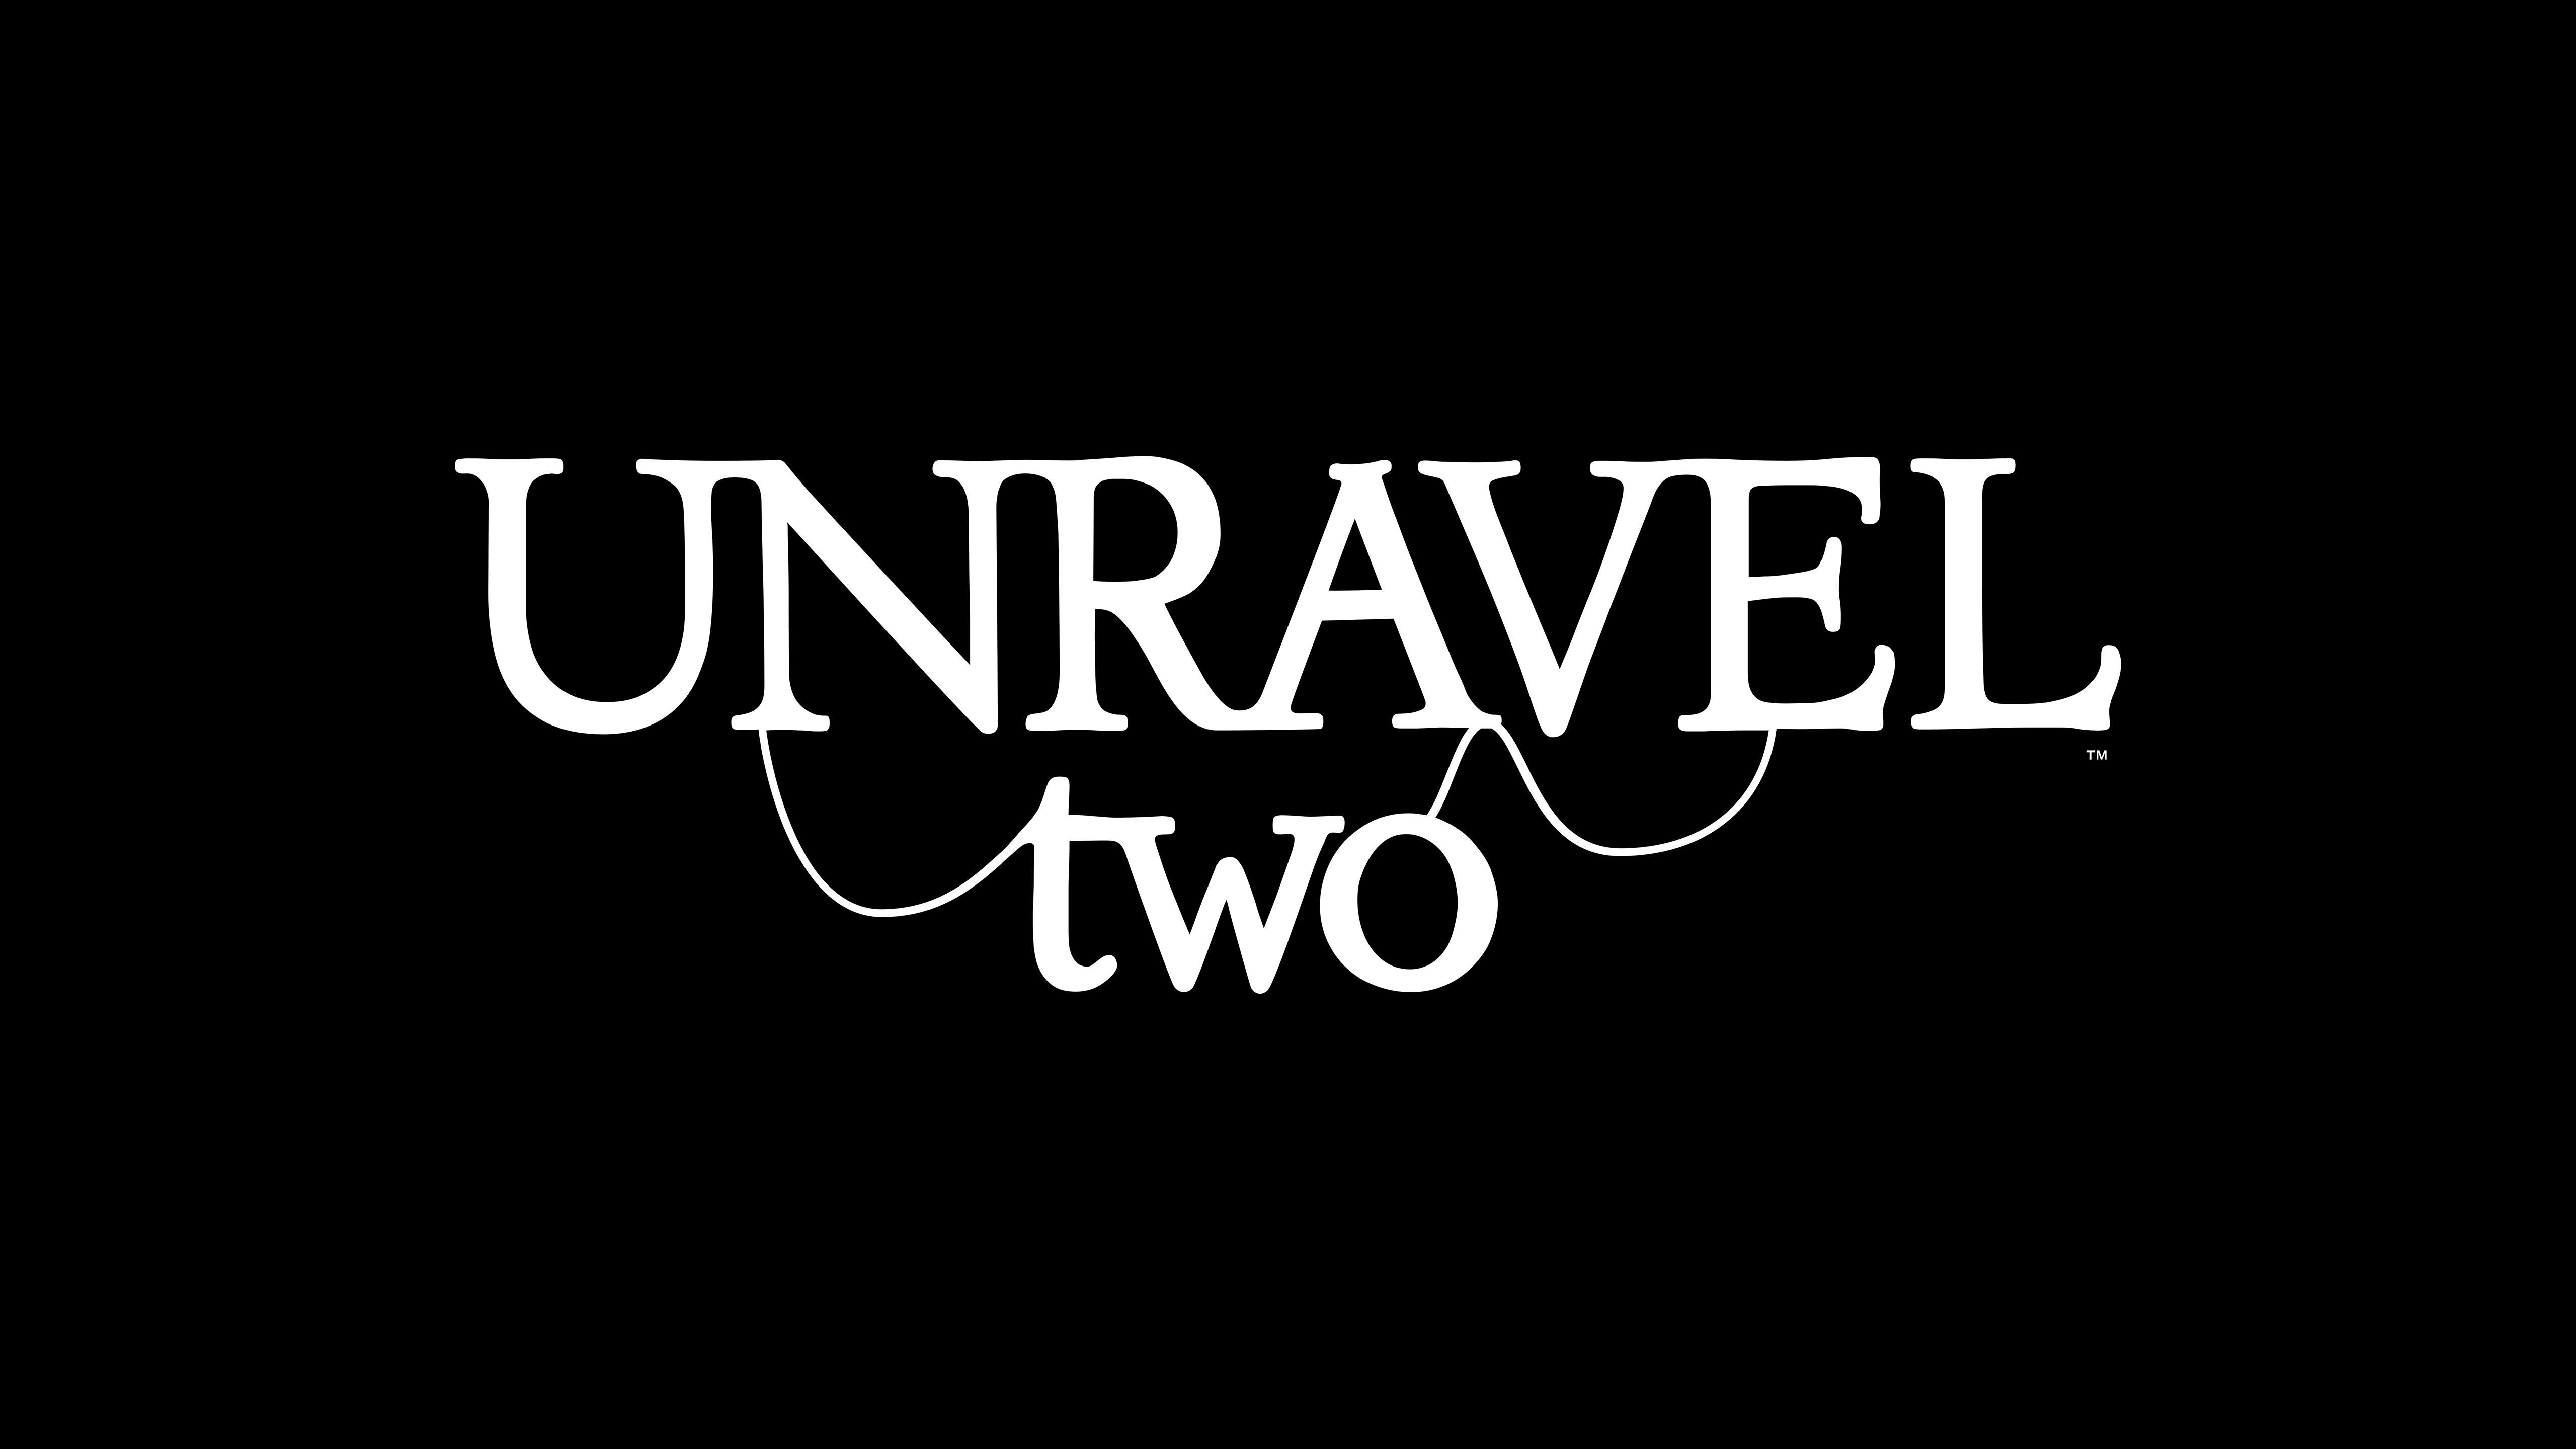 Unravel 2 Logo 5k, HD Games, 4k Wallpapers, Images, Backgrounds